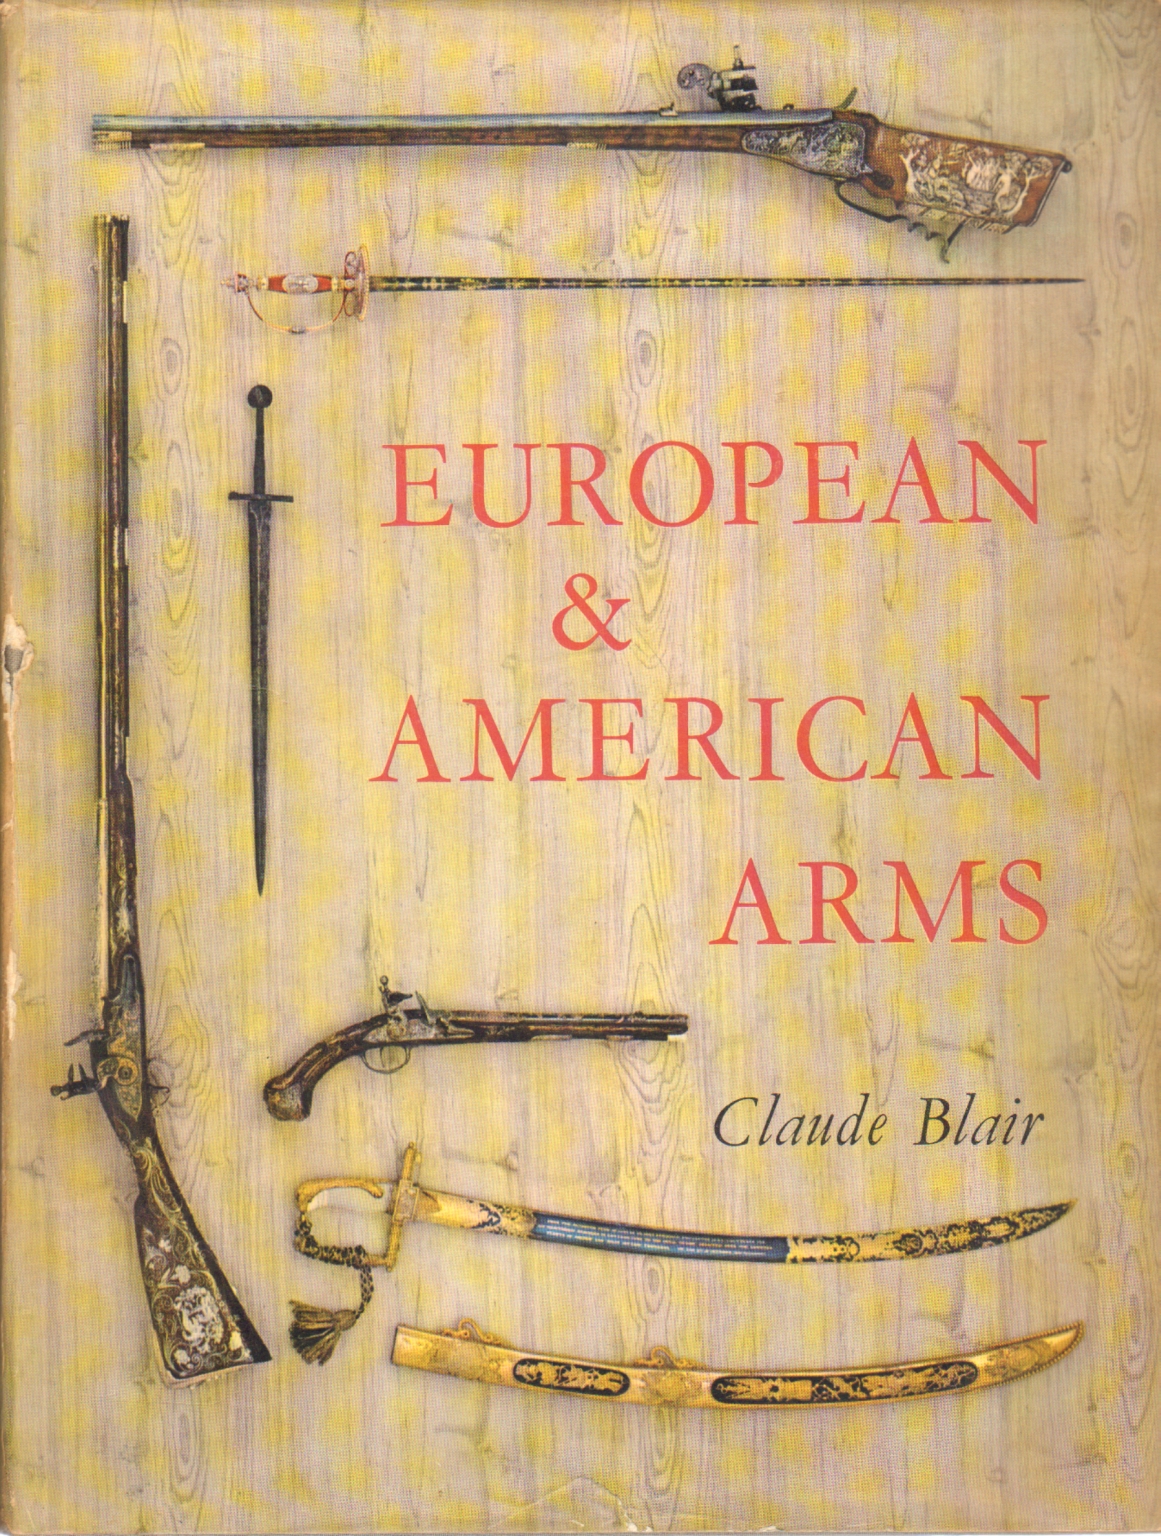 European & American arms, Claude Blair